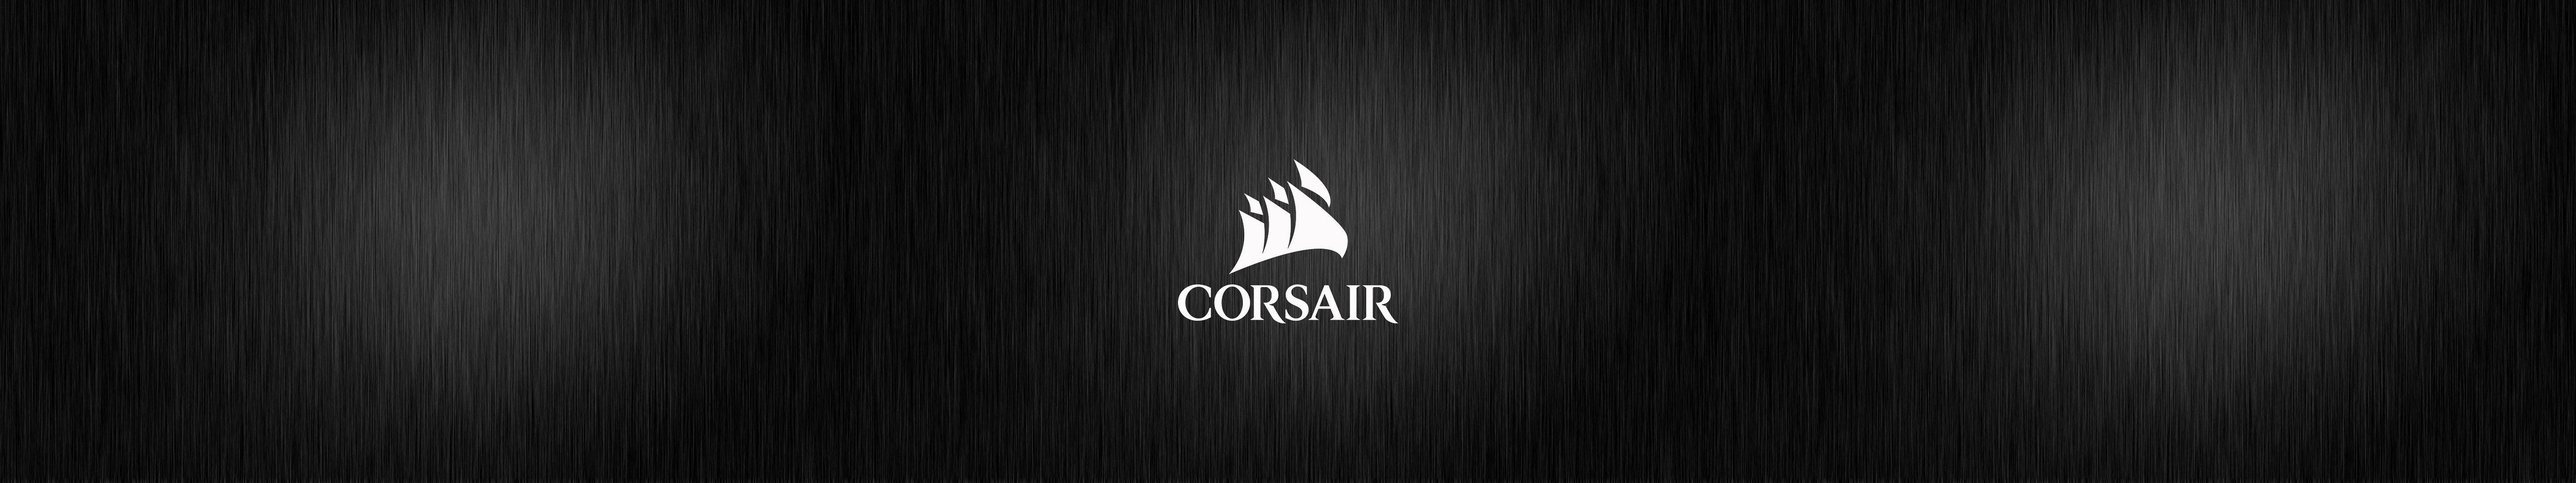 Black Corsair Triple Monitor Background